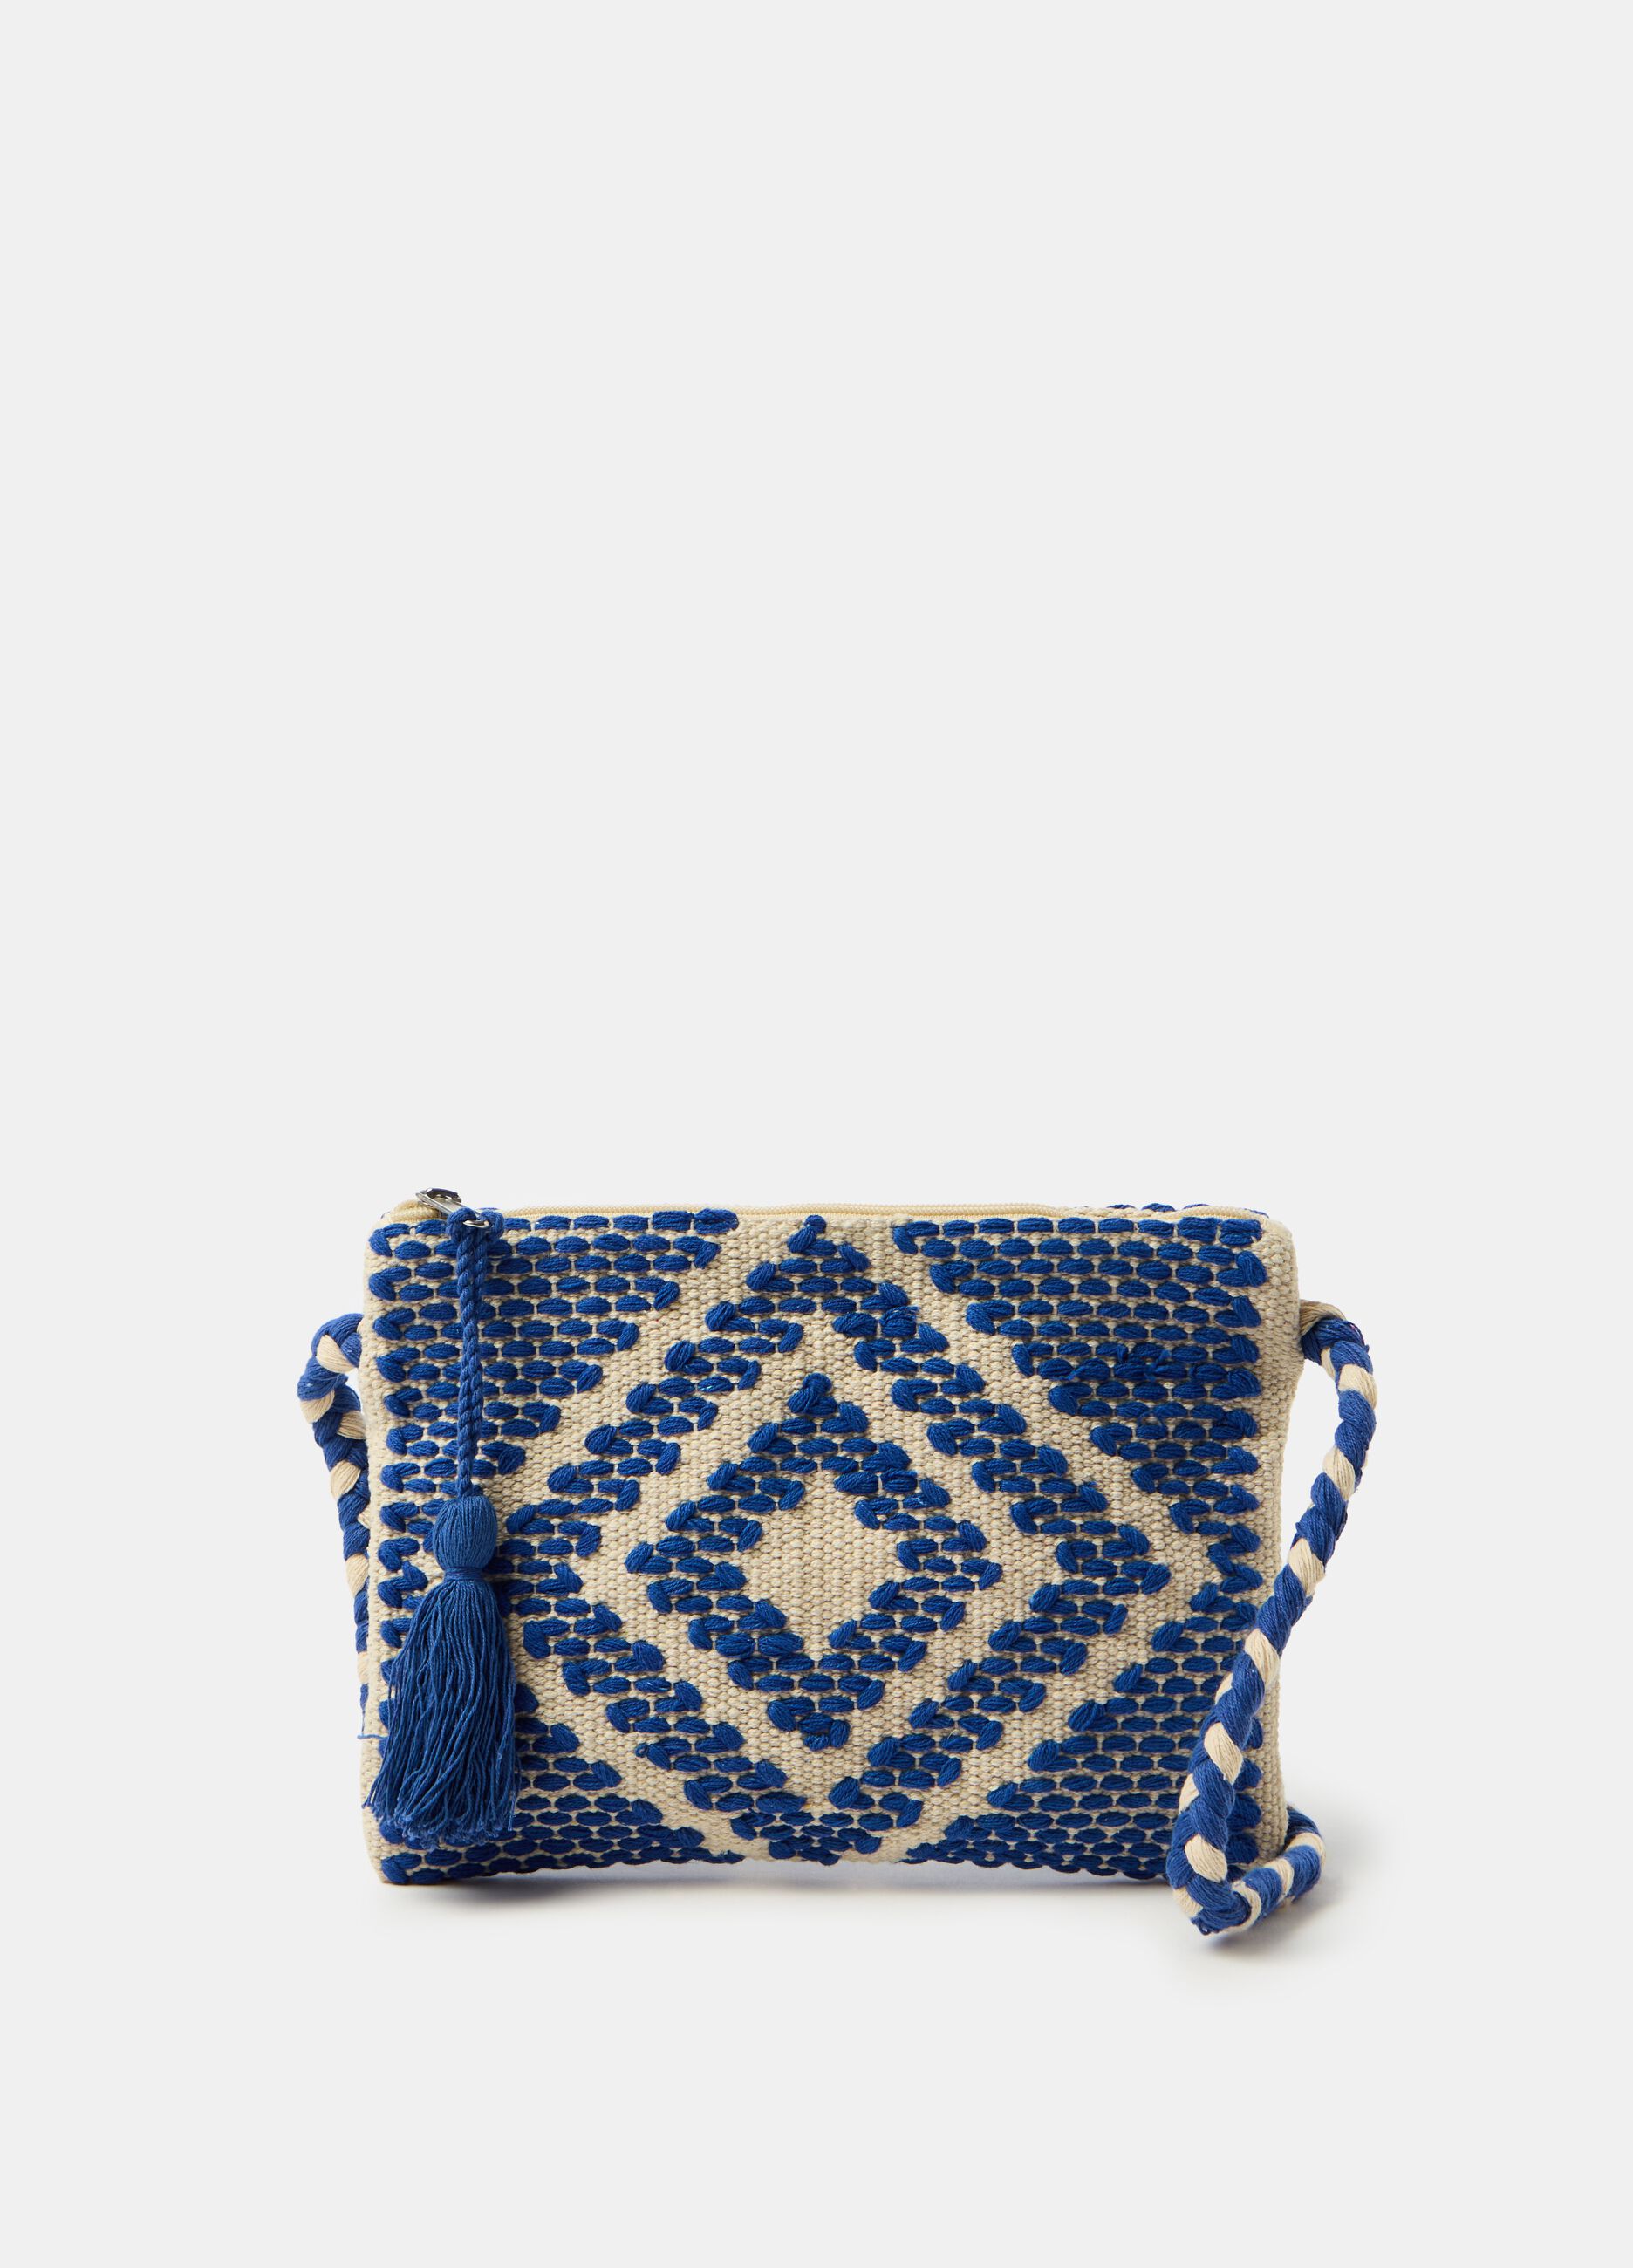 Shoulder bag with diamonds motif